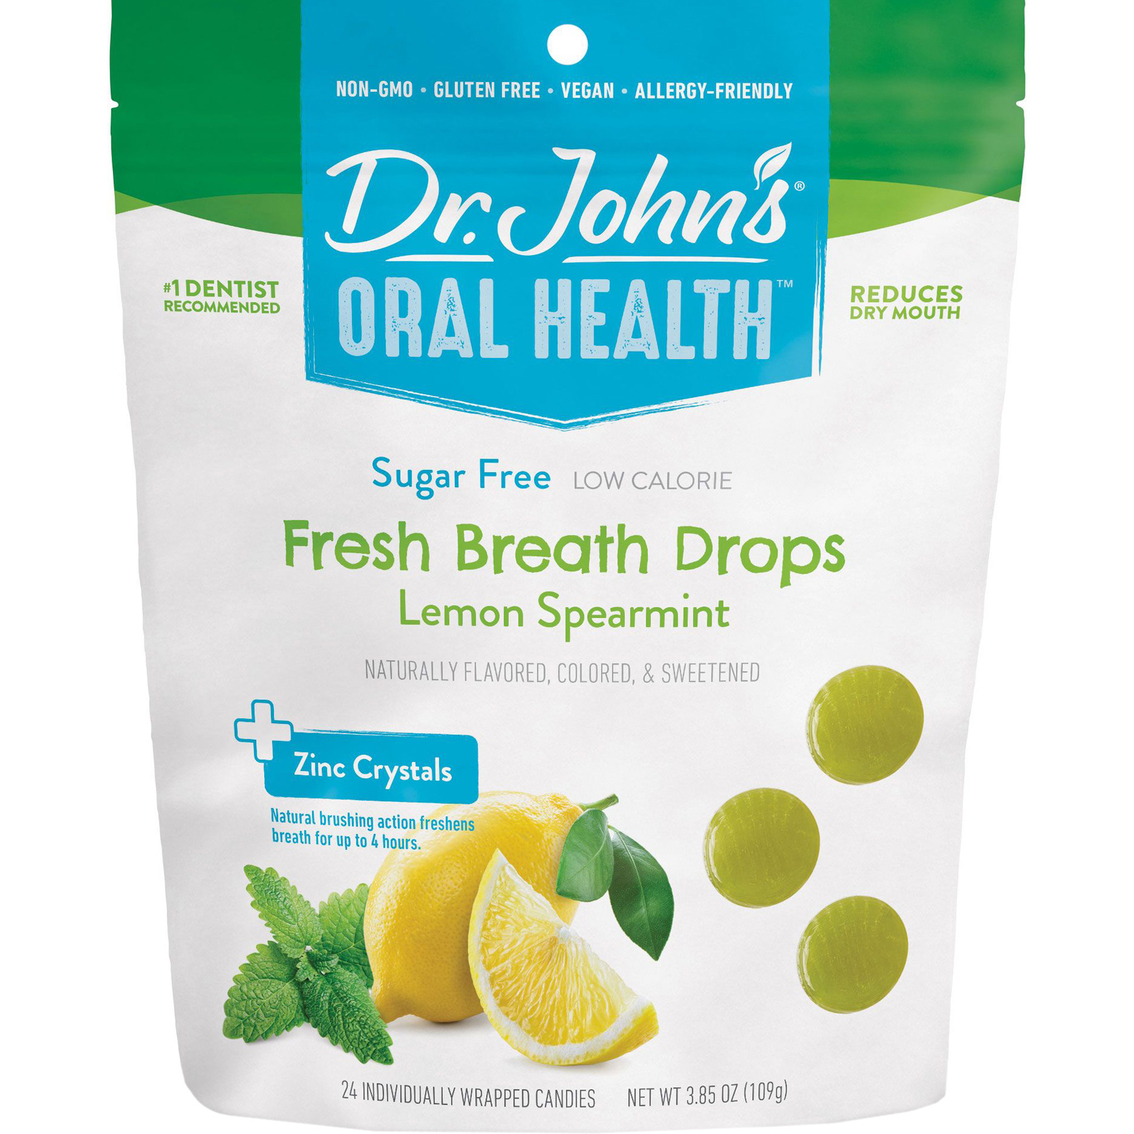 Dr. John's Healthy Sweets Oral Health Fresh Breath Drops 10 bags